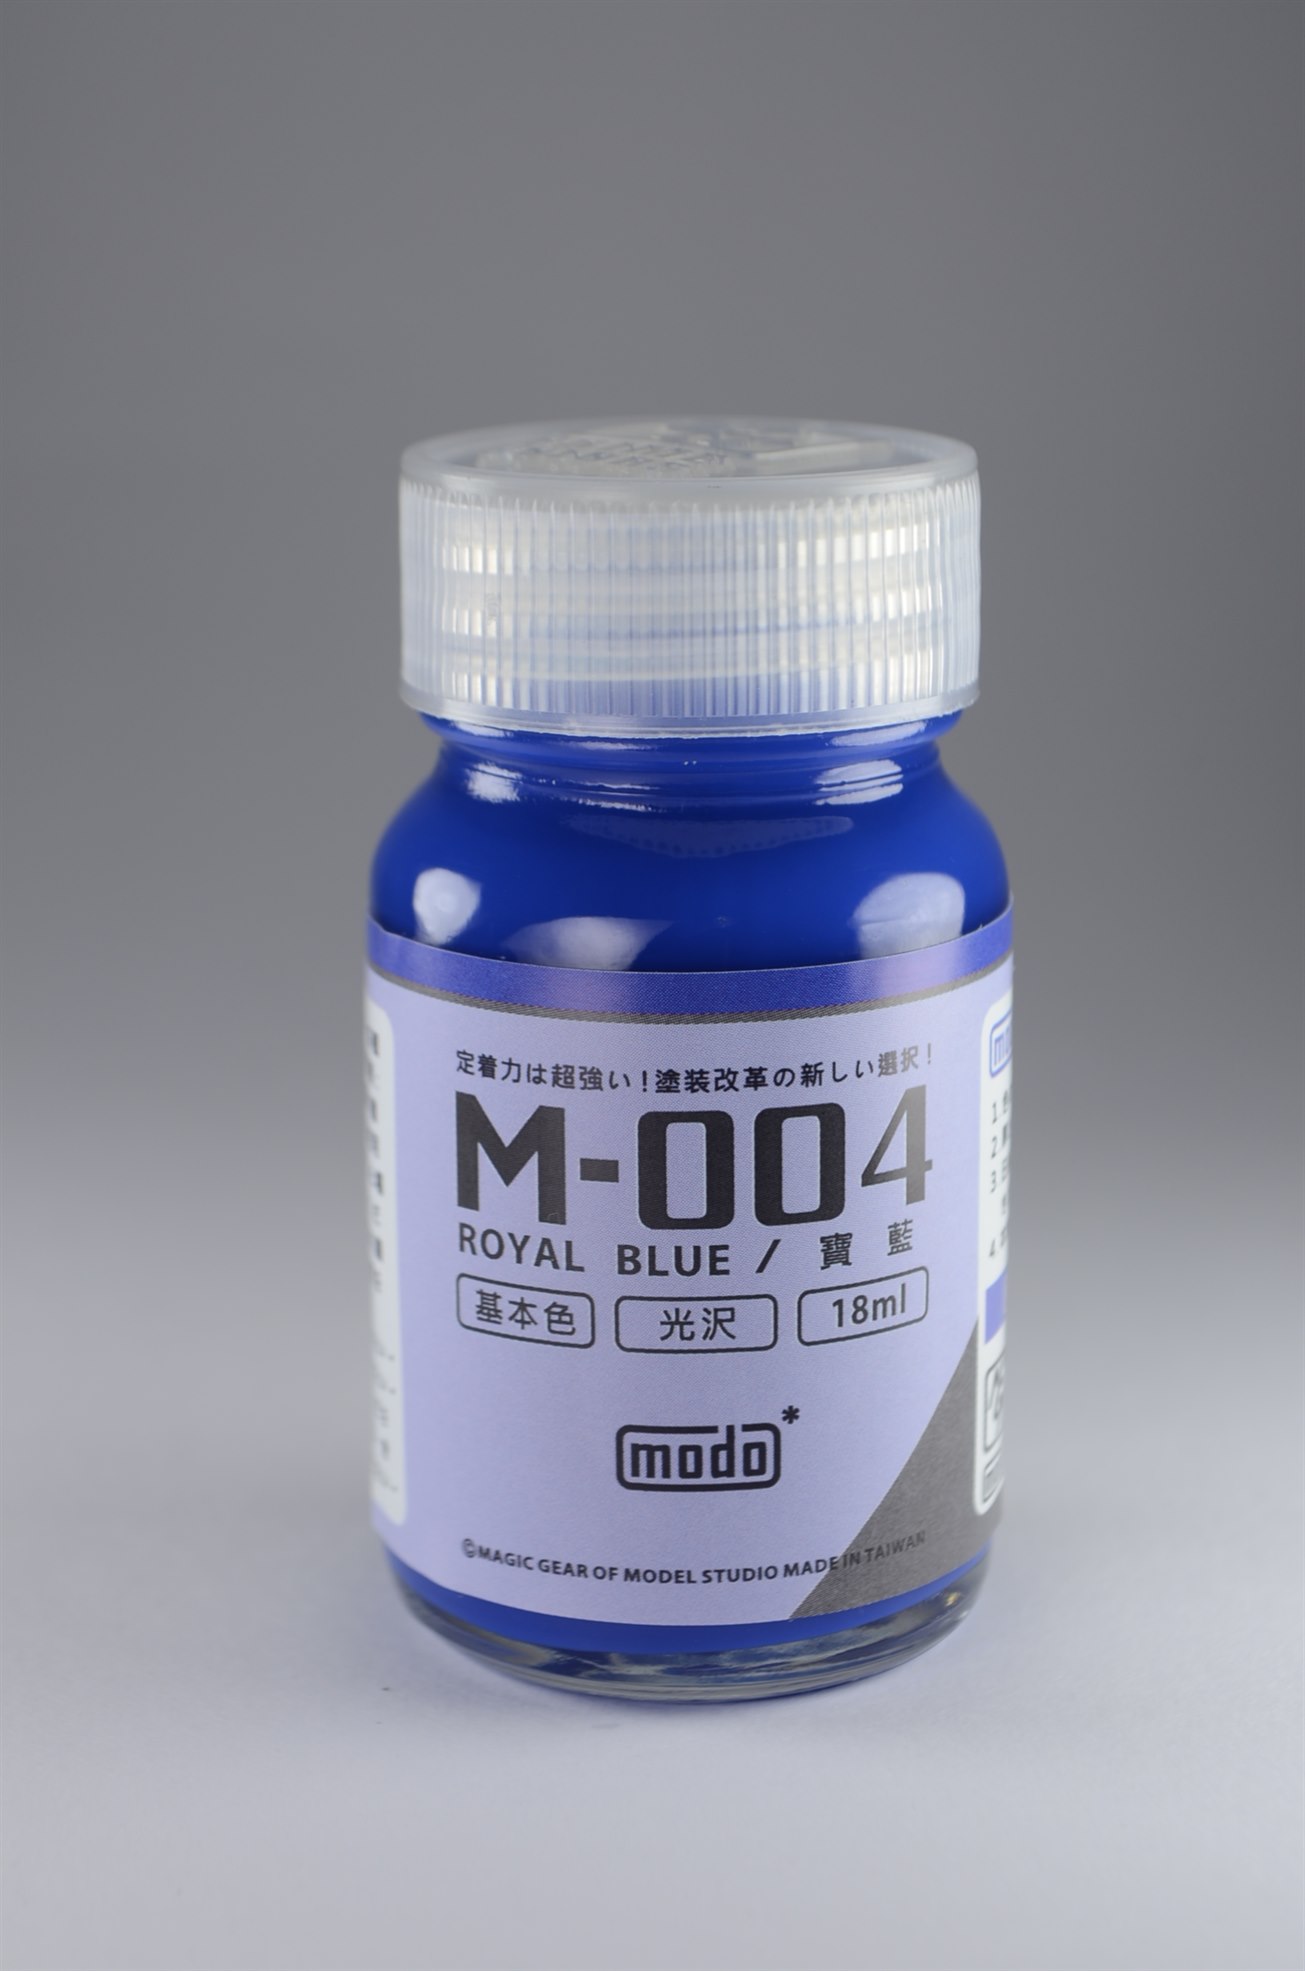 MODO M-004 Royal Blue 18ML